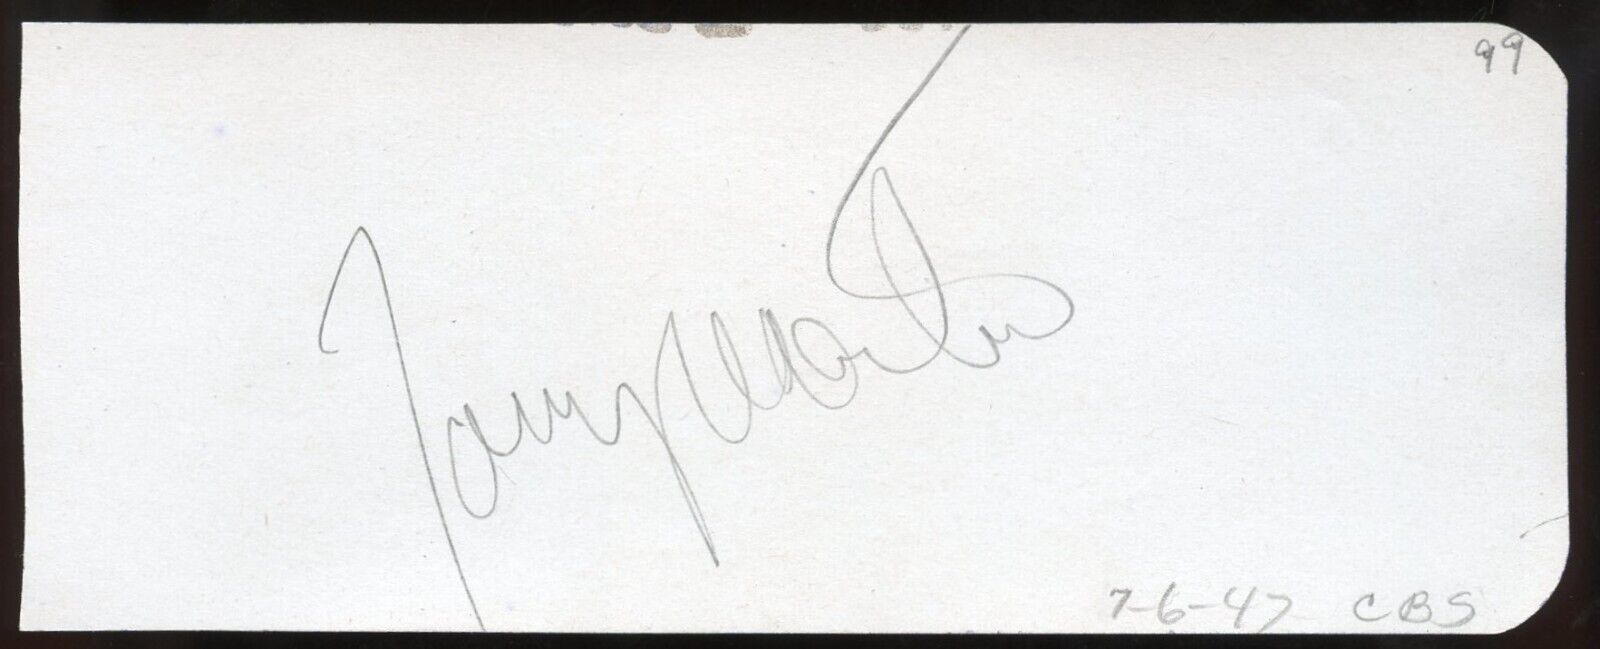 Tony Martin d2012 signed 2x5 autograph on 7-6-47 at CBS Playhouse Hollywood